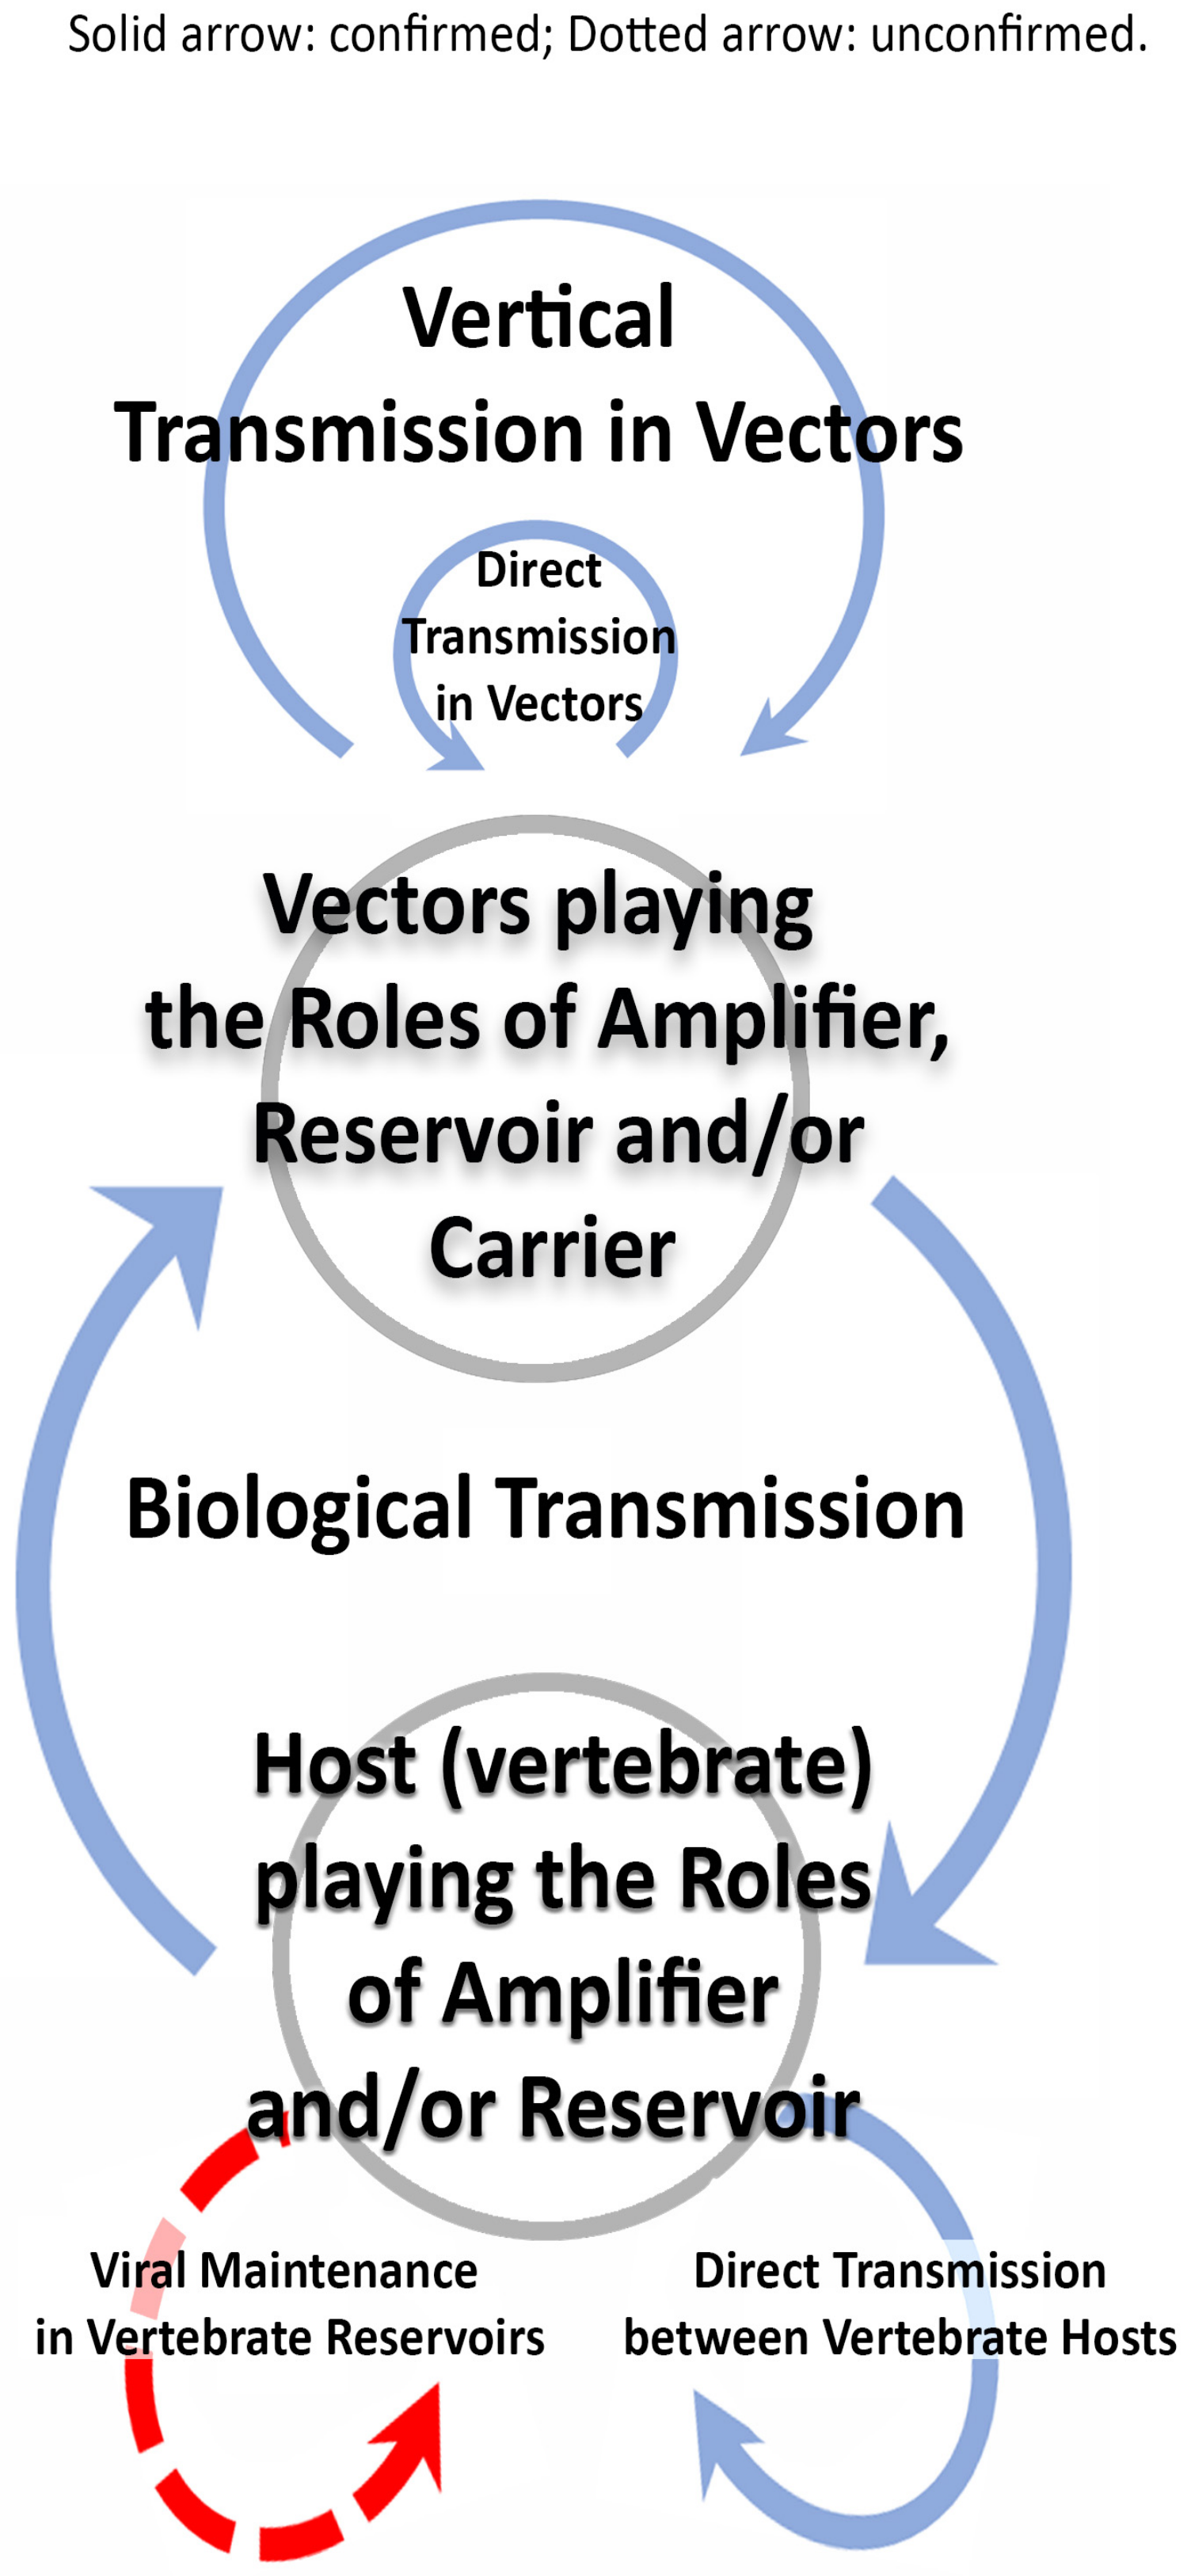 Viruses | Free Full-Text | Vertebrate Reservoirs of Arboviruses: Myth,  Synonym of Amplifier, or Reality? | HTML